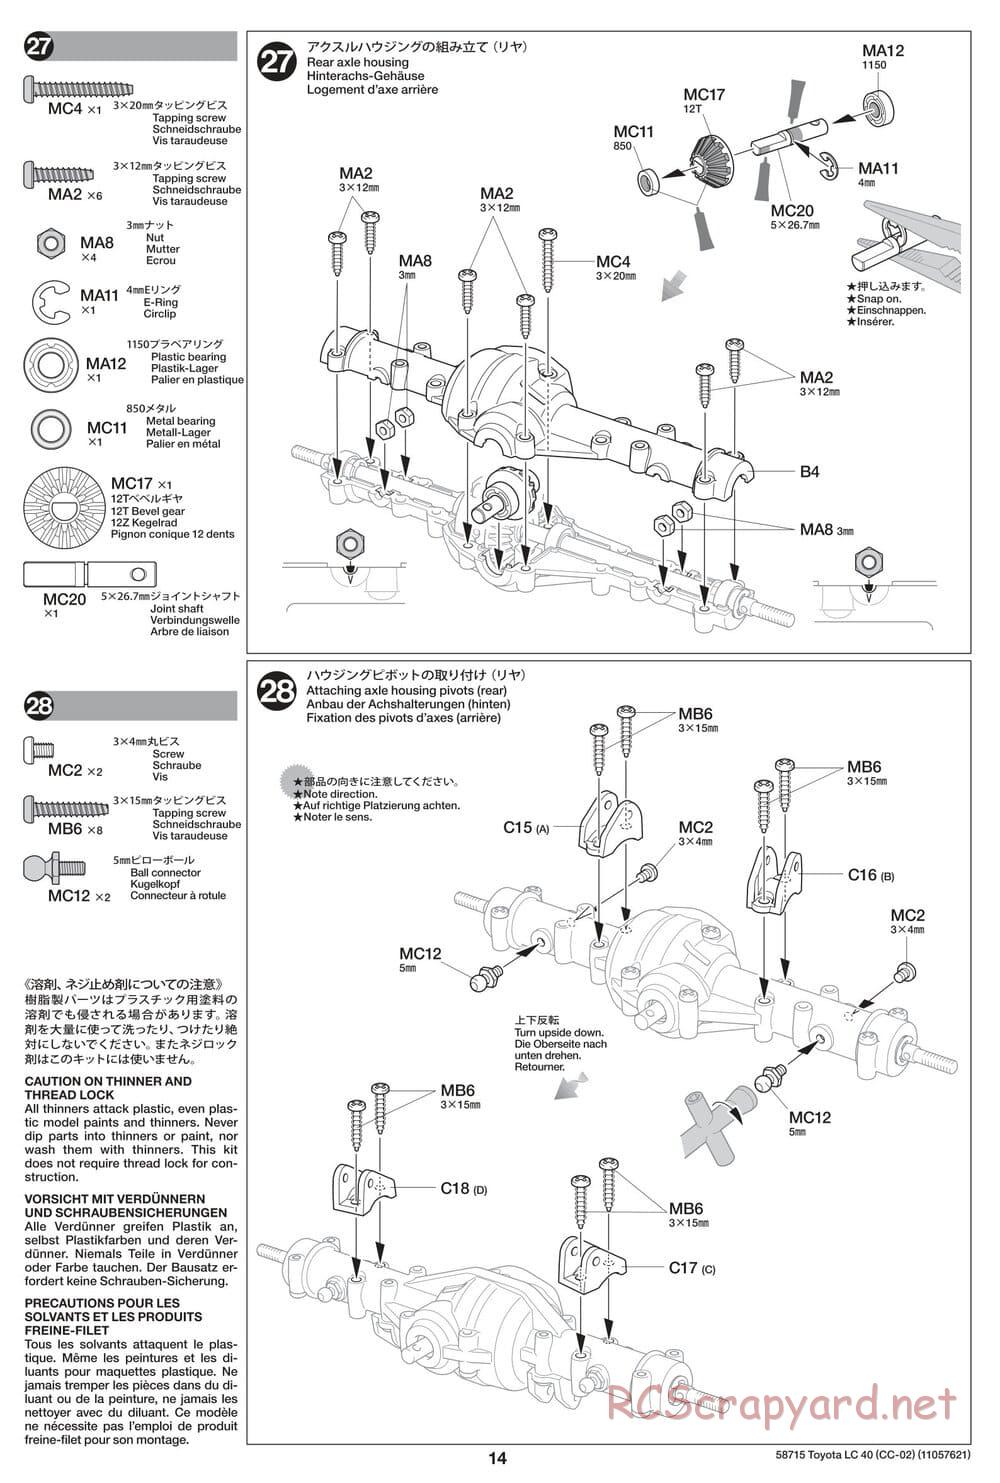 Tamiya - Toyota Land Cruiser 40 - CC-02 Chassis - Manual - Page 14